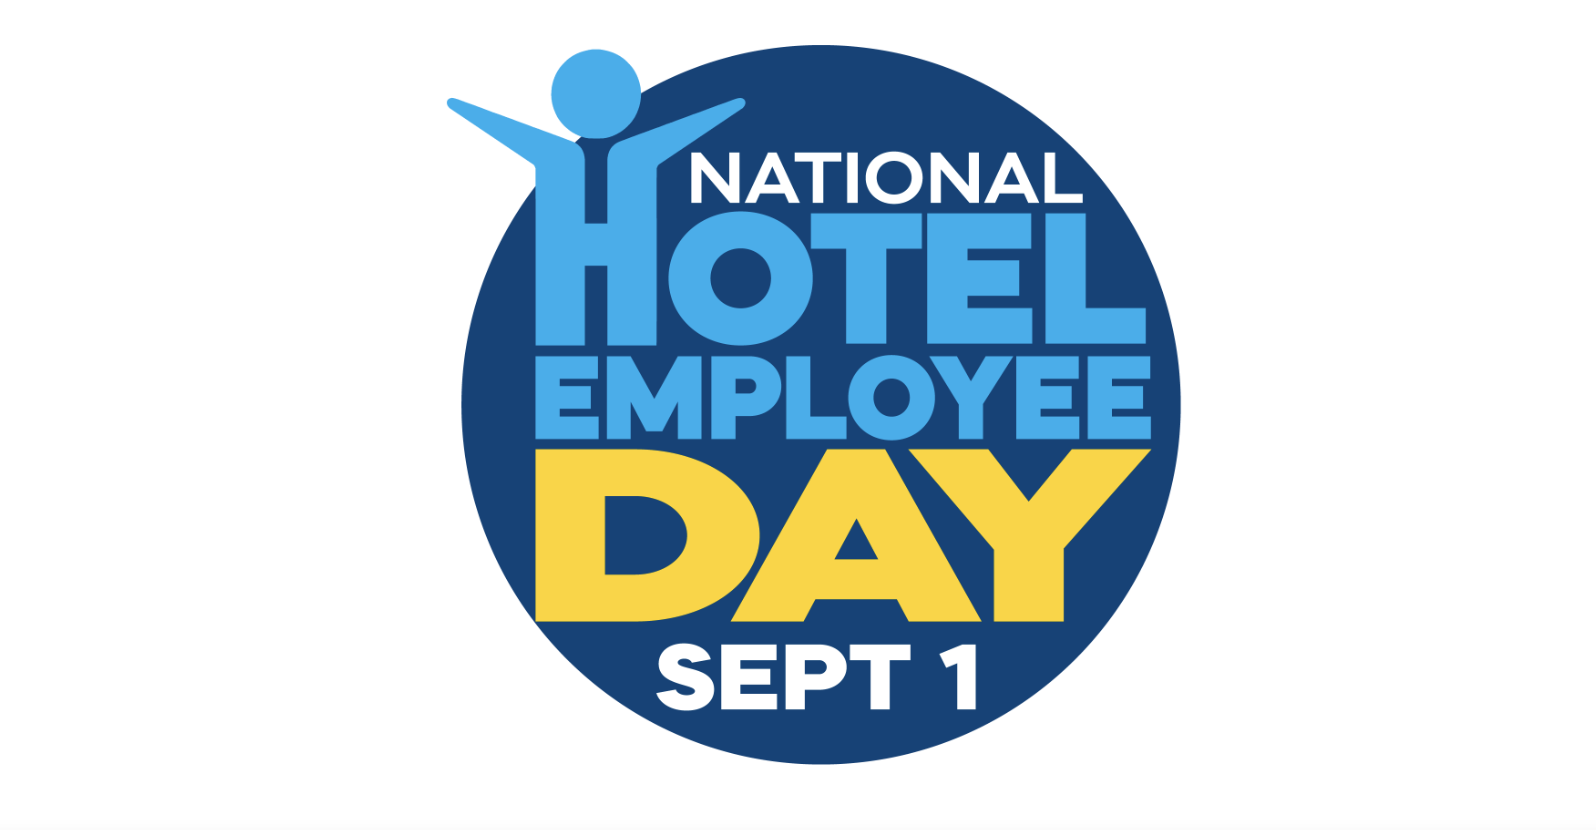 National Hotel Employee Day